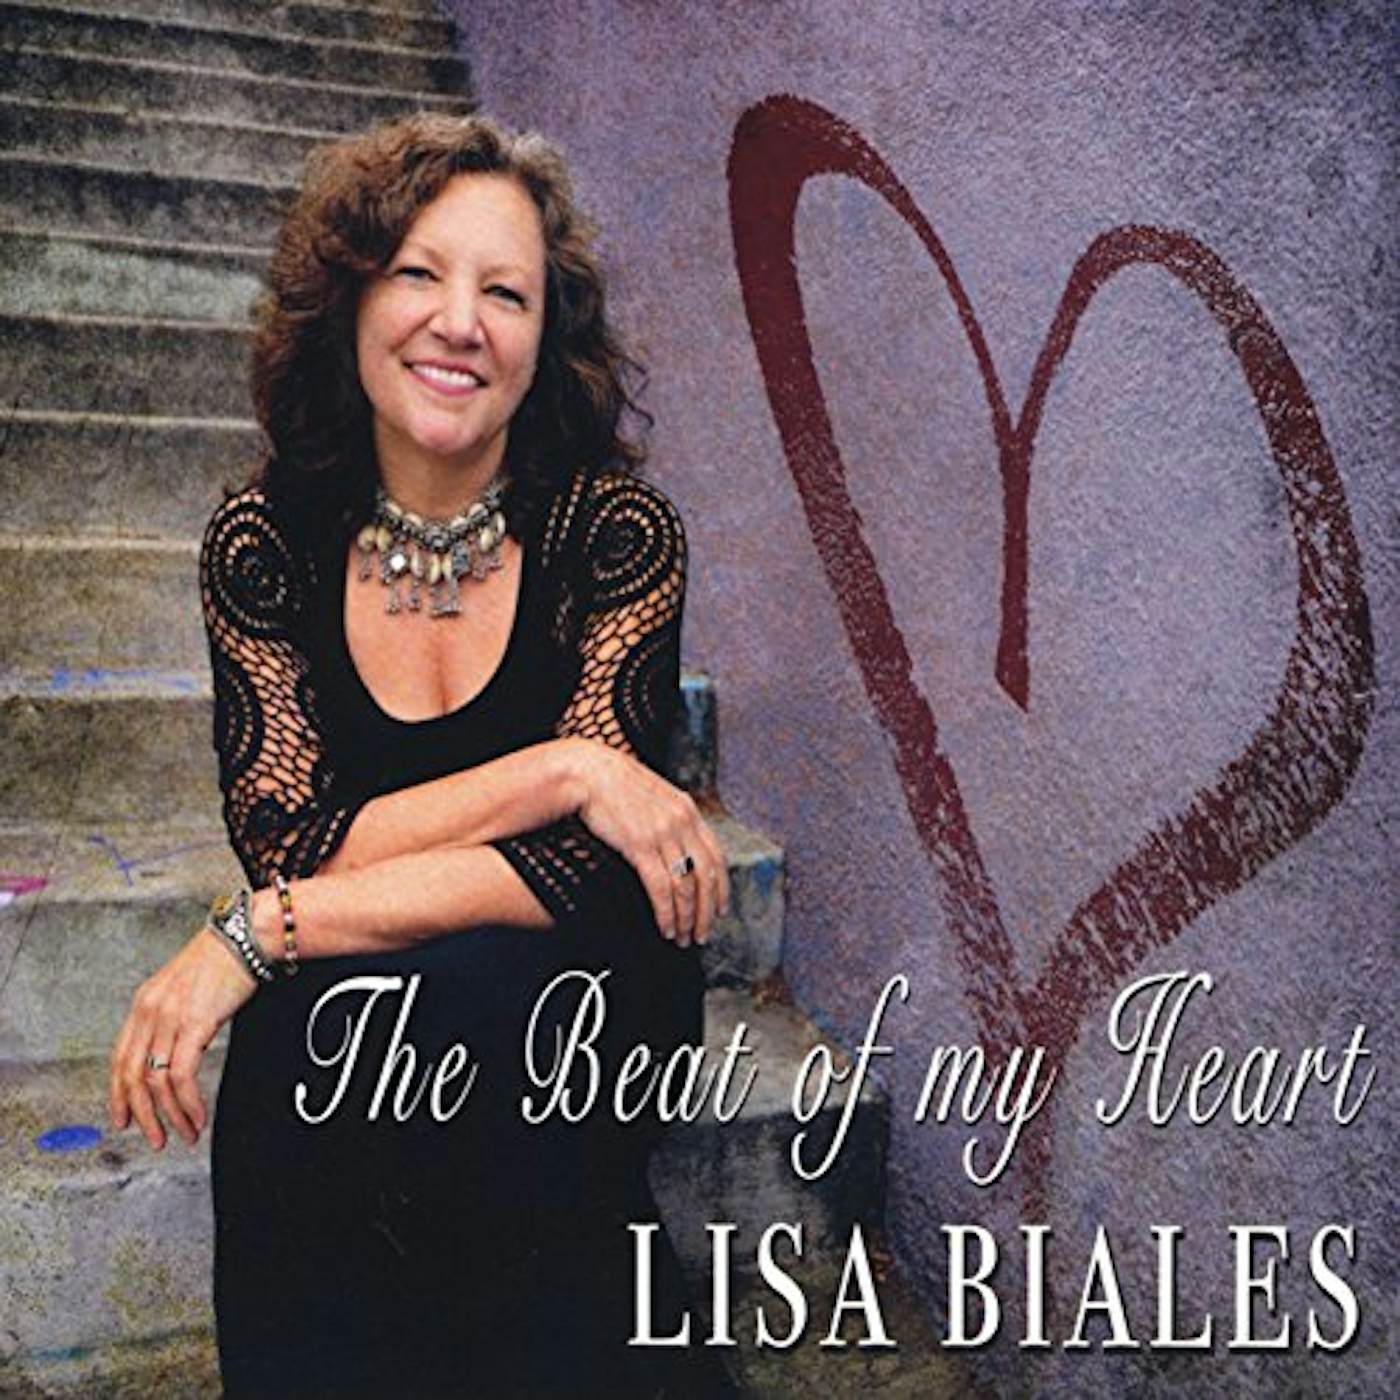 Lisa Biales BEAT OF MY HEART Vinyl Record